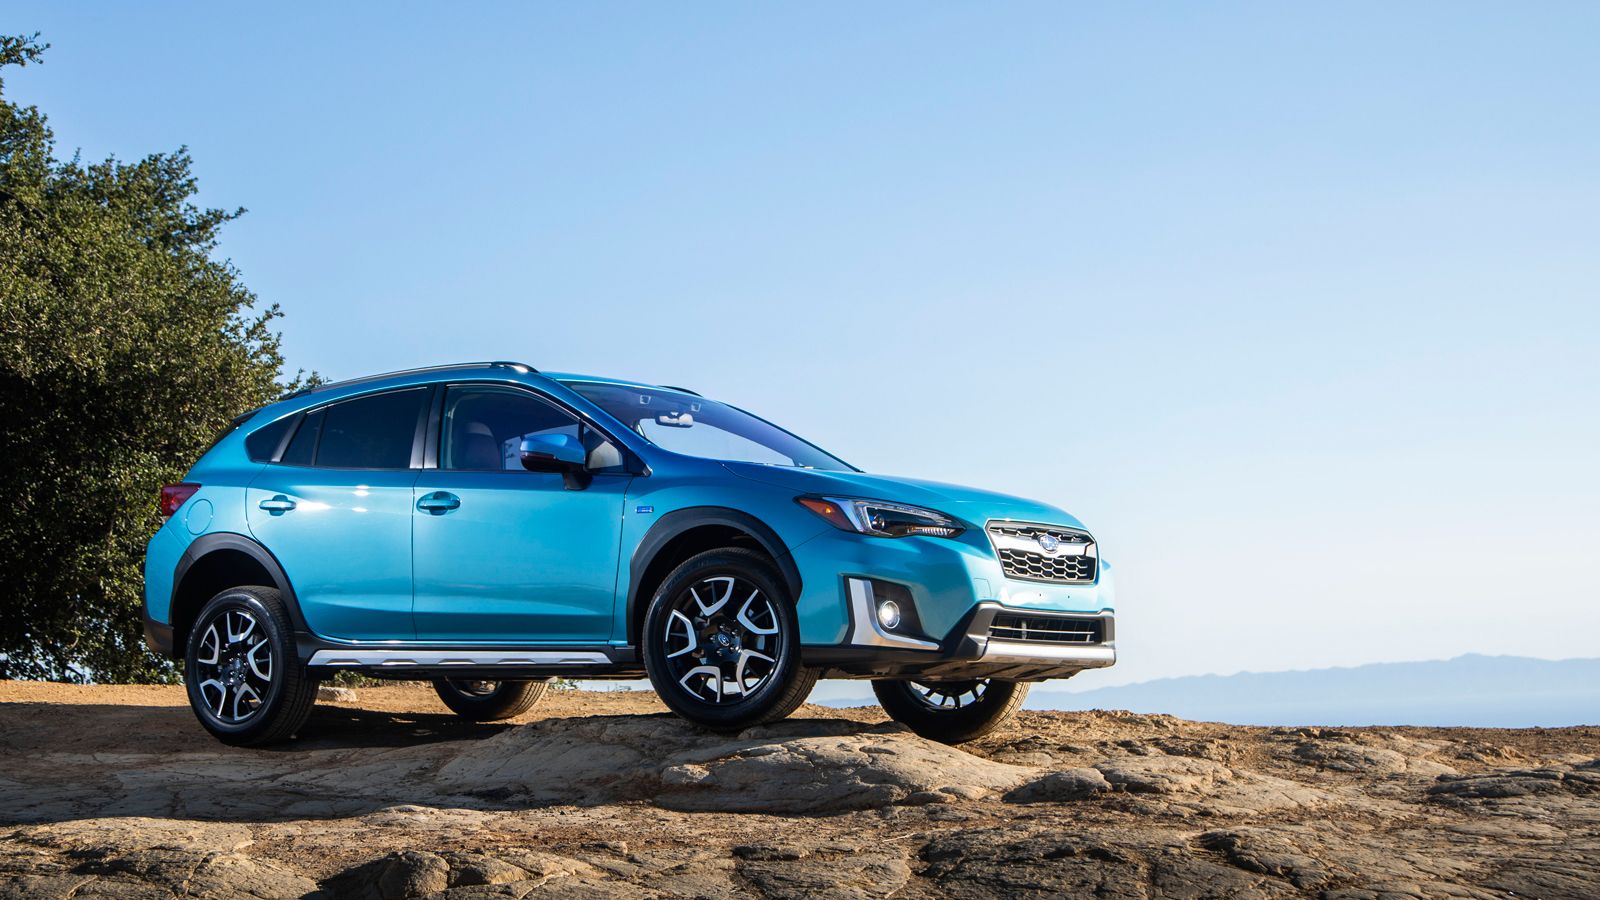 2019 Subaru Crosstrek Hybrid: Power isn't everything